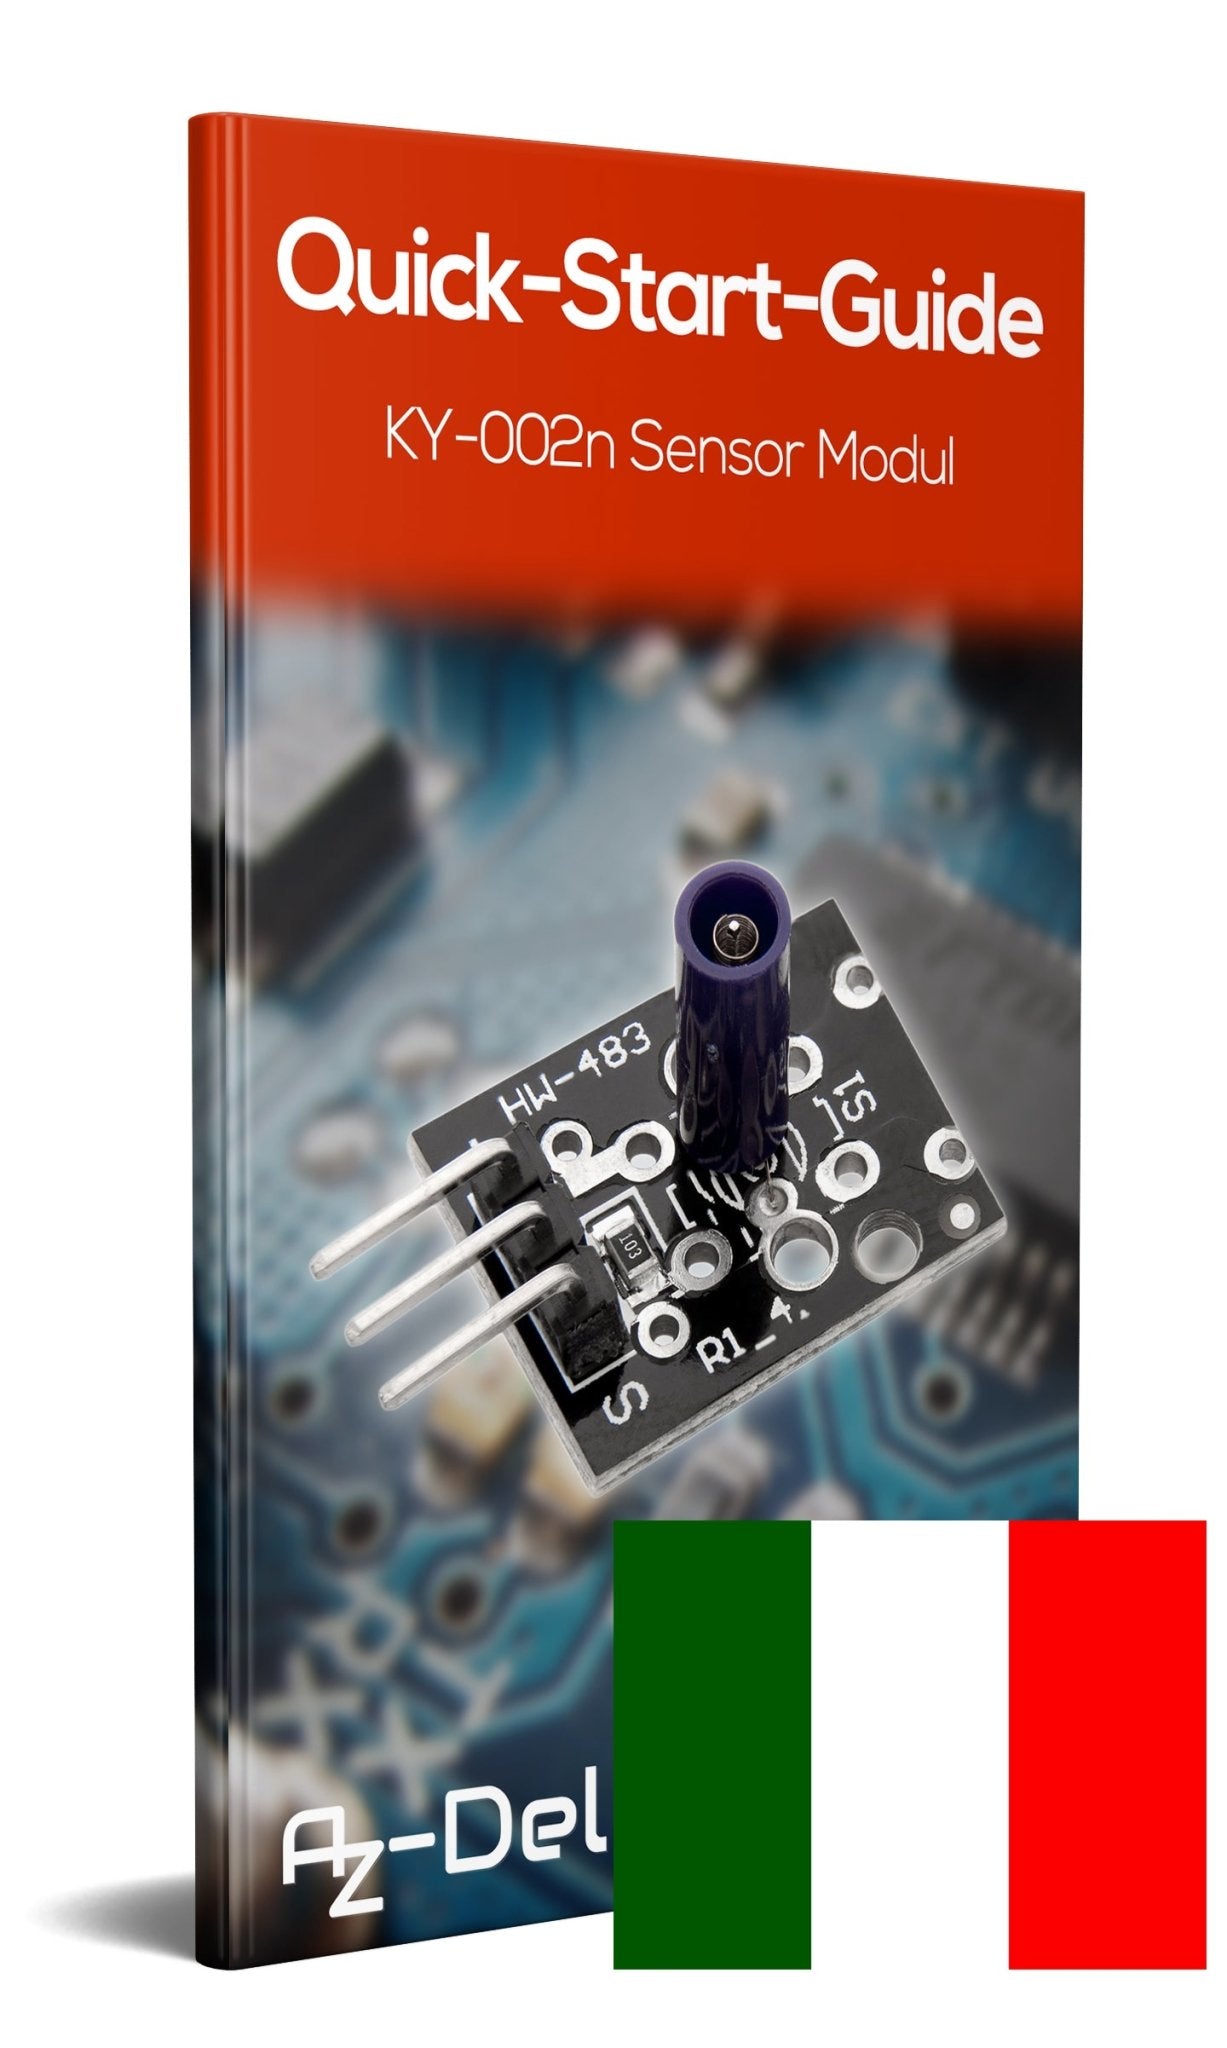 KY-002n Sensor Modul - AZ-Delivery